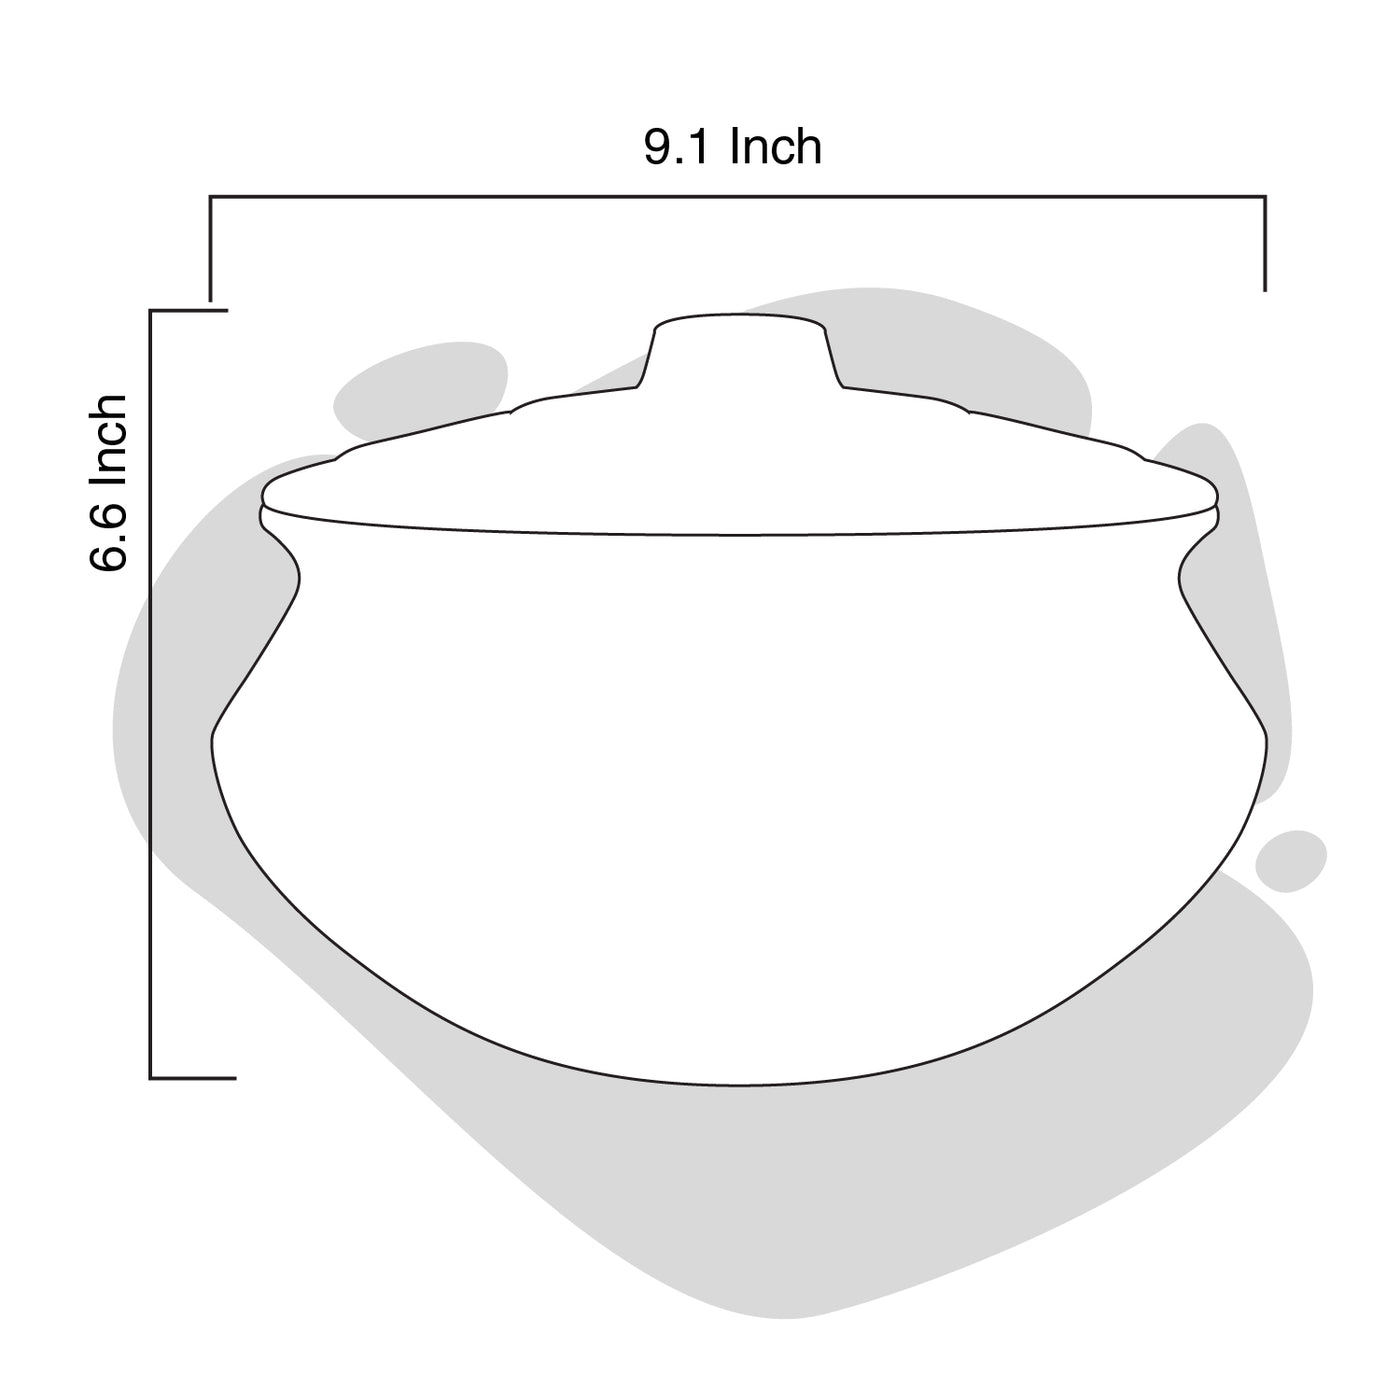 Clay Cooking Pot Biryani (Deep) 2L (Terracotta Cookware)